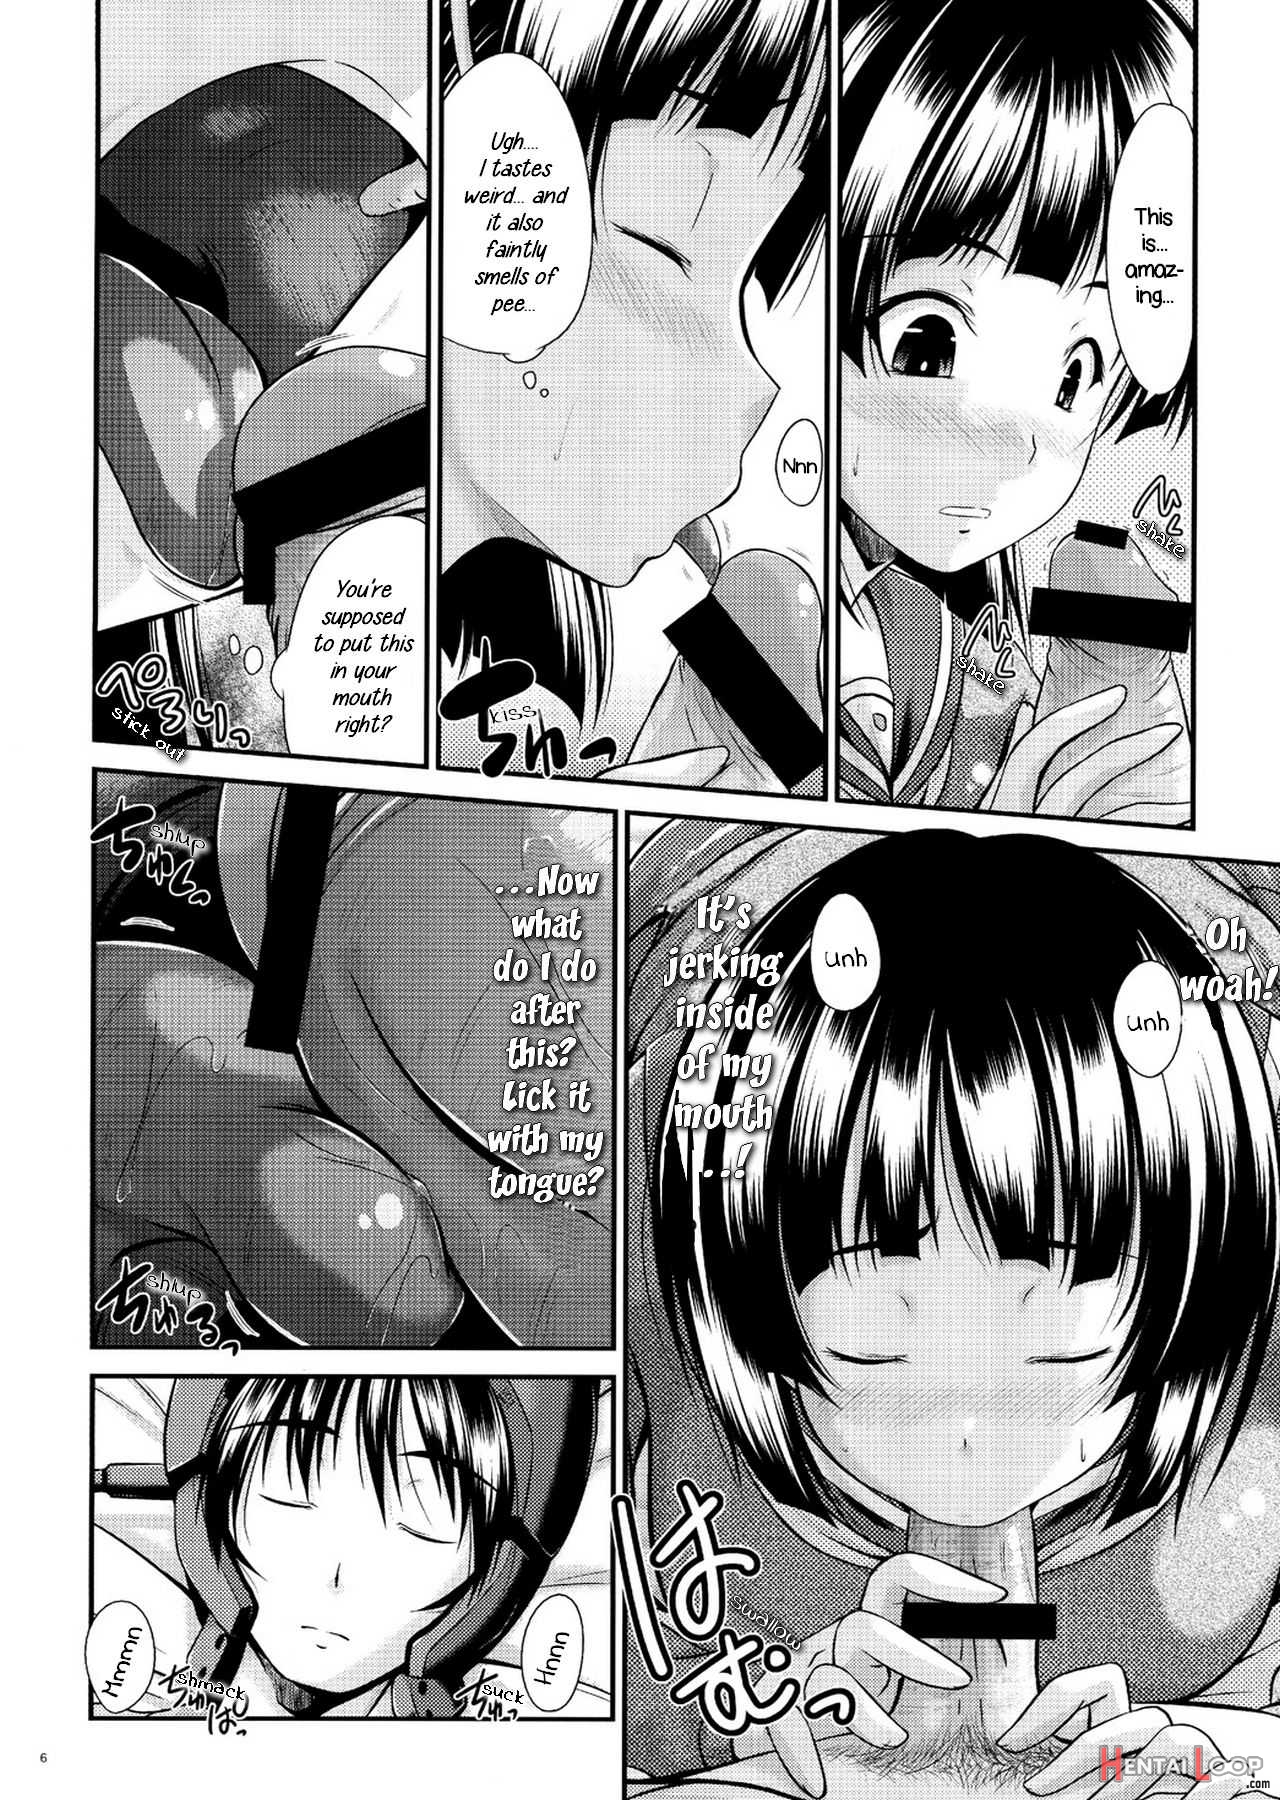 Suguha's Secret page 5